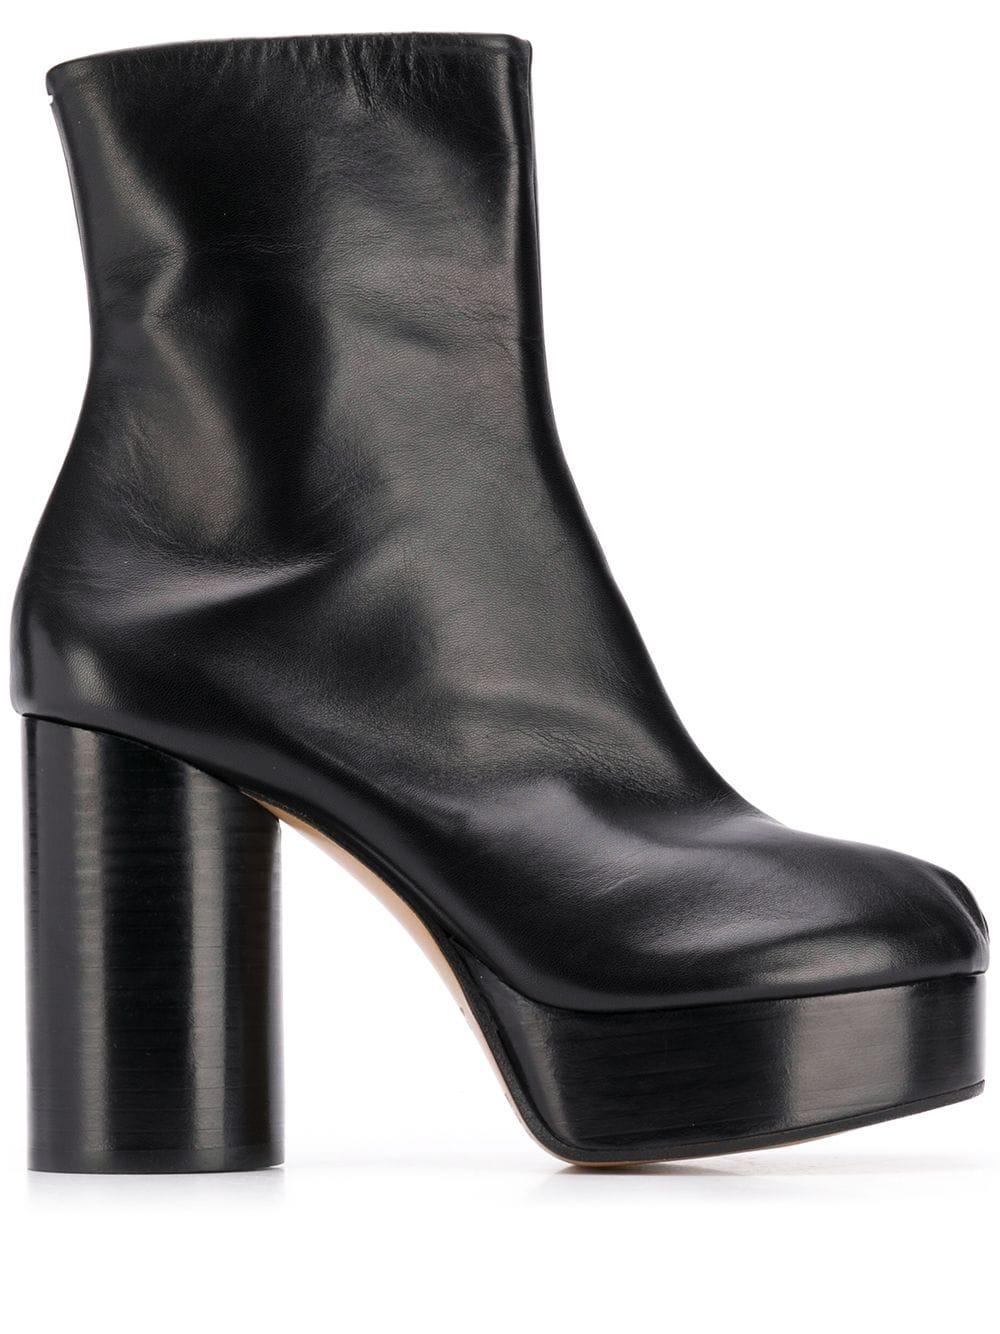 Maison Margiela Leather Tabi Platform Ankle Boots in Black | Lyst